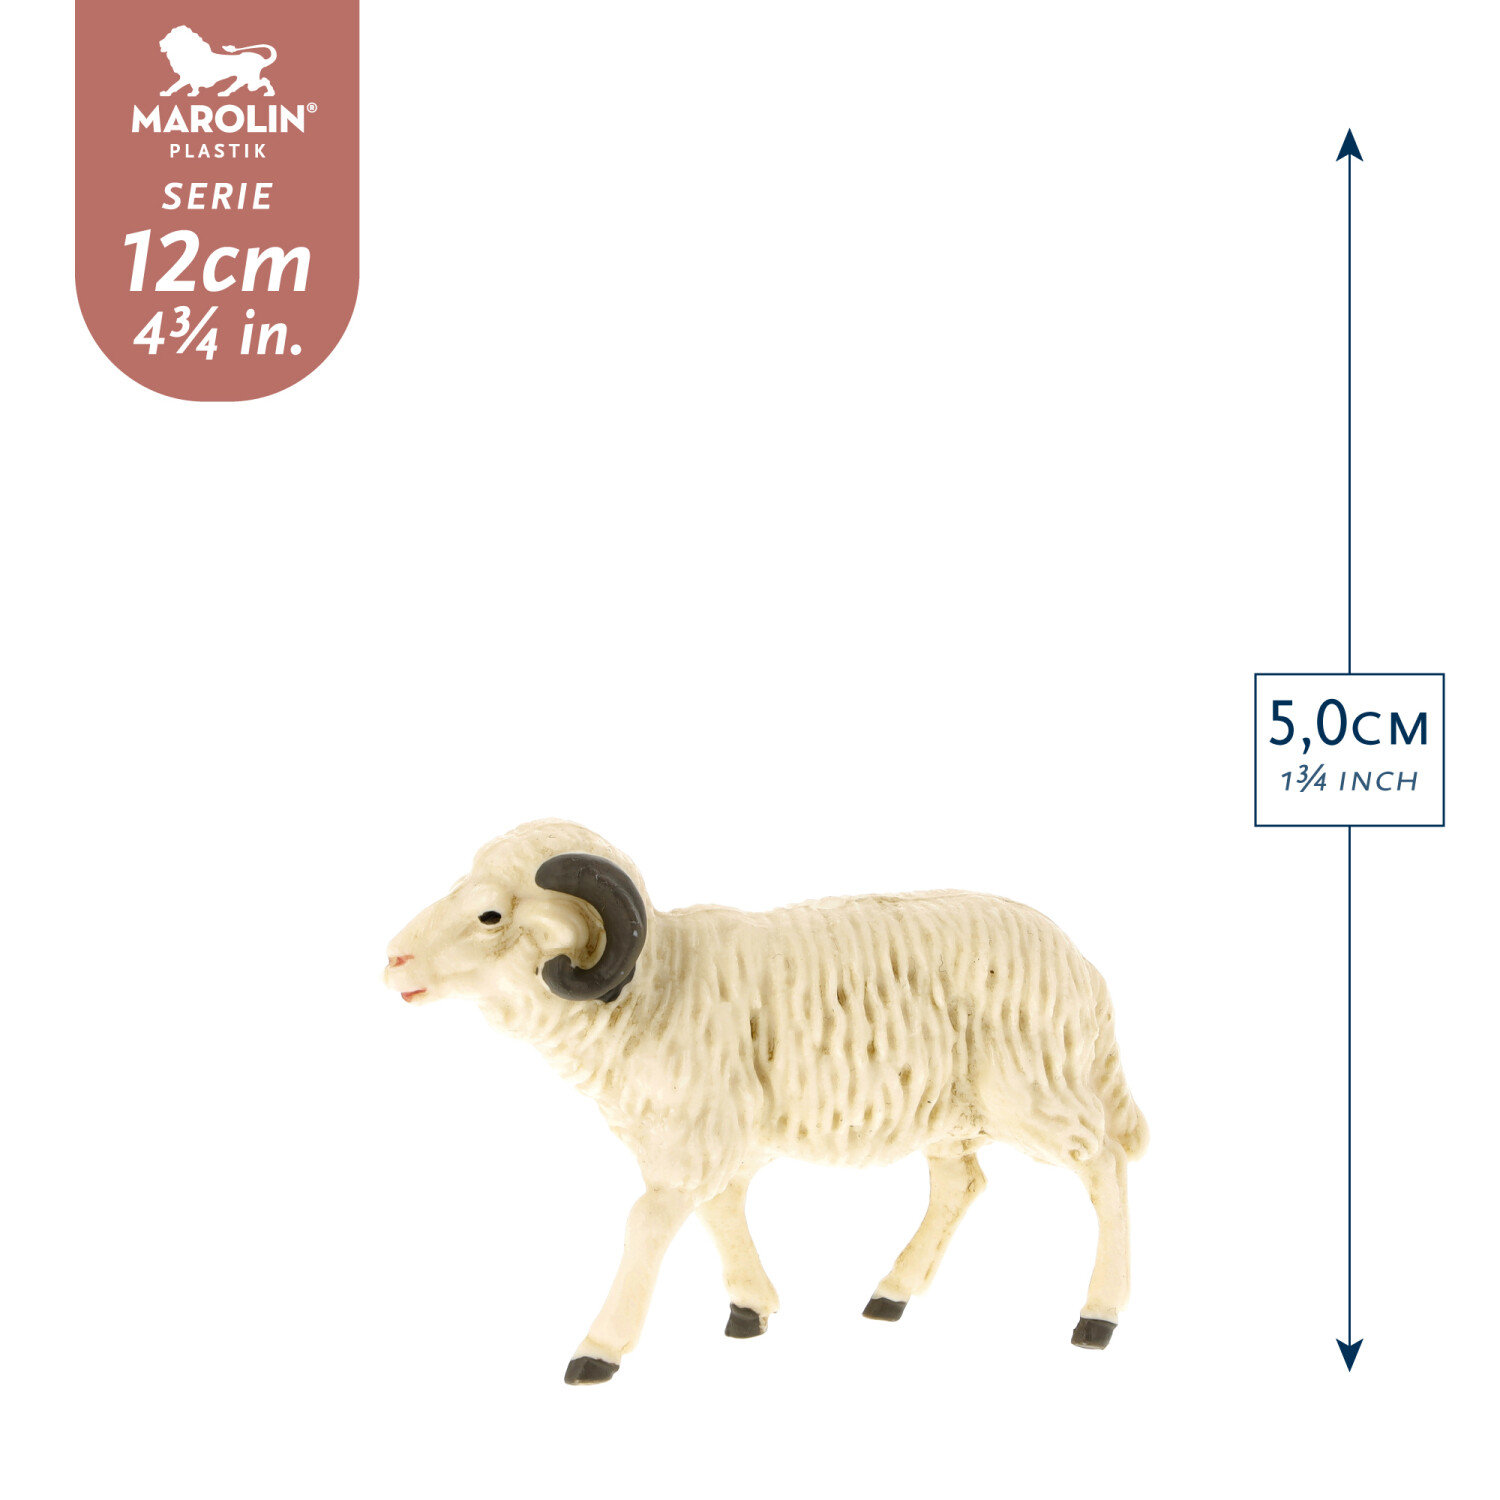 Flock of sheep - Marolin Plastik - Resin Nativity figure - made in Germany